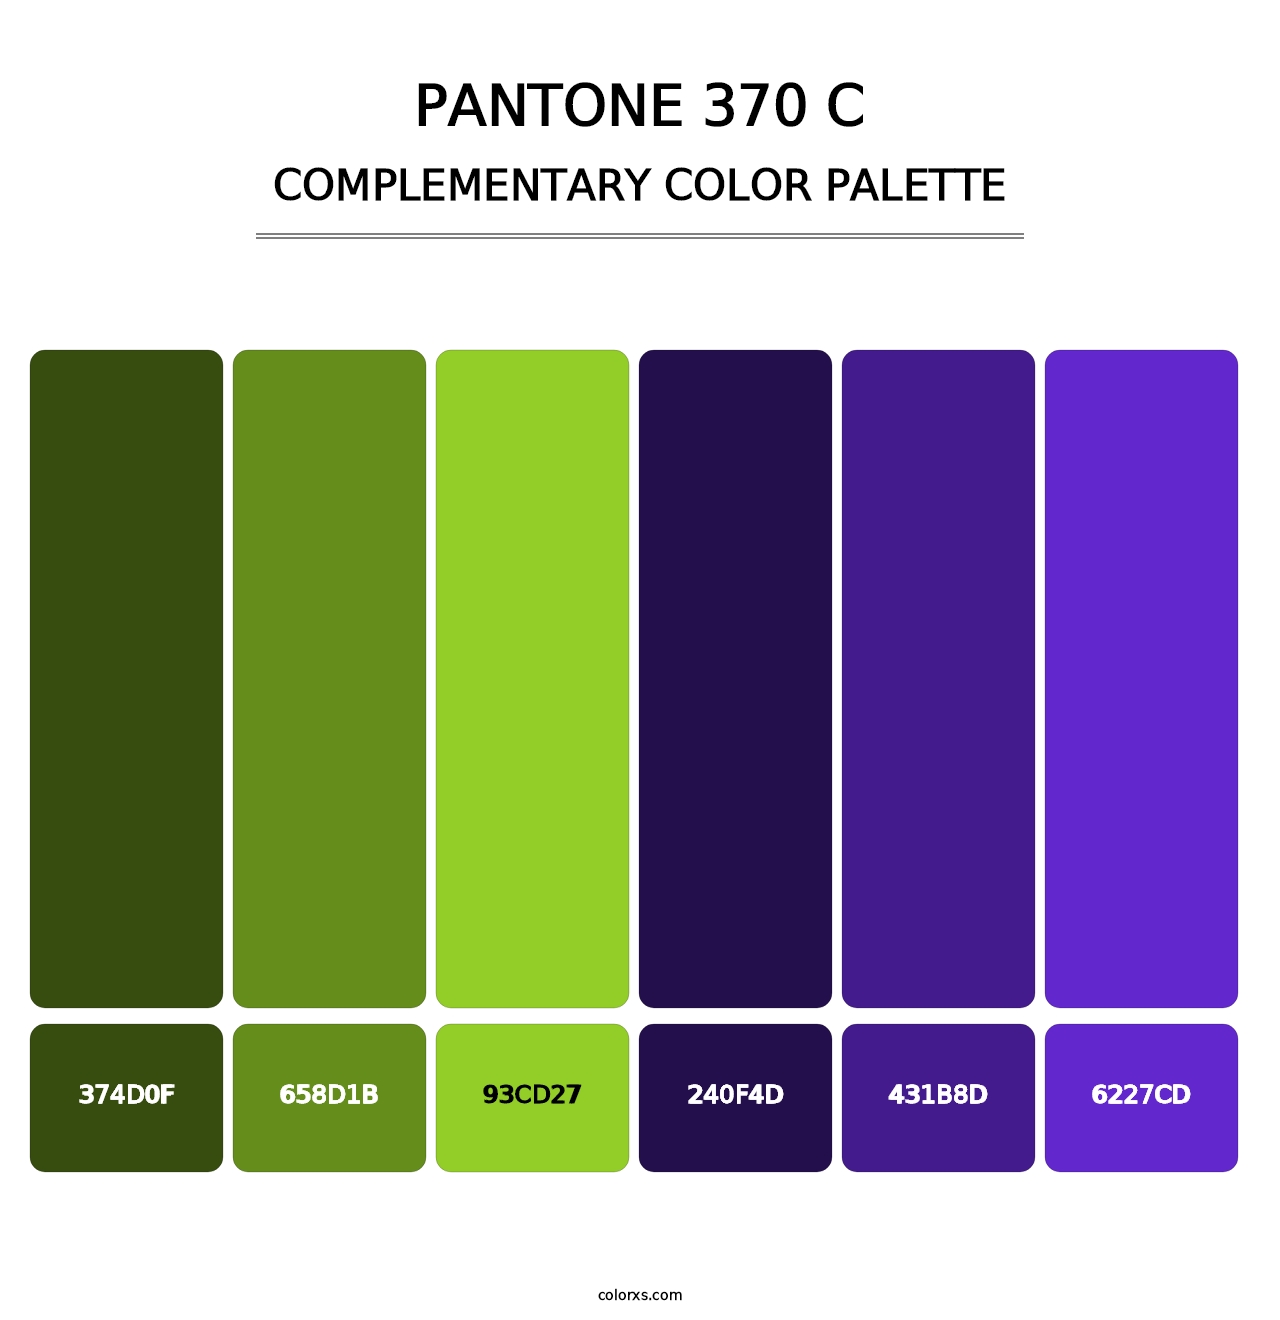 PANTONE 370 C - Complementary Color Palette